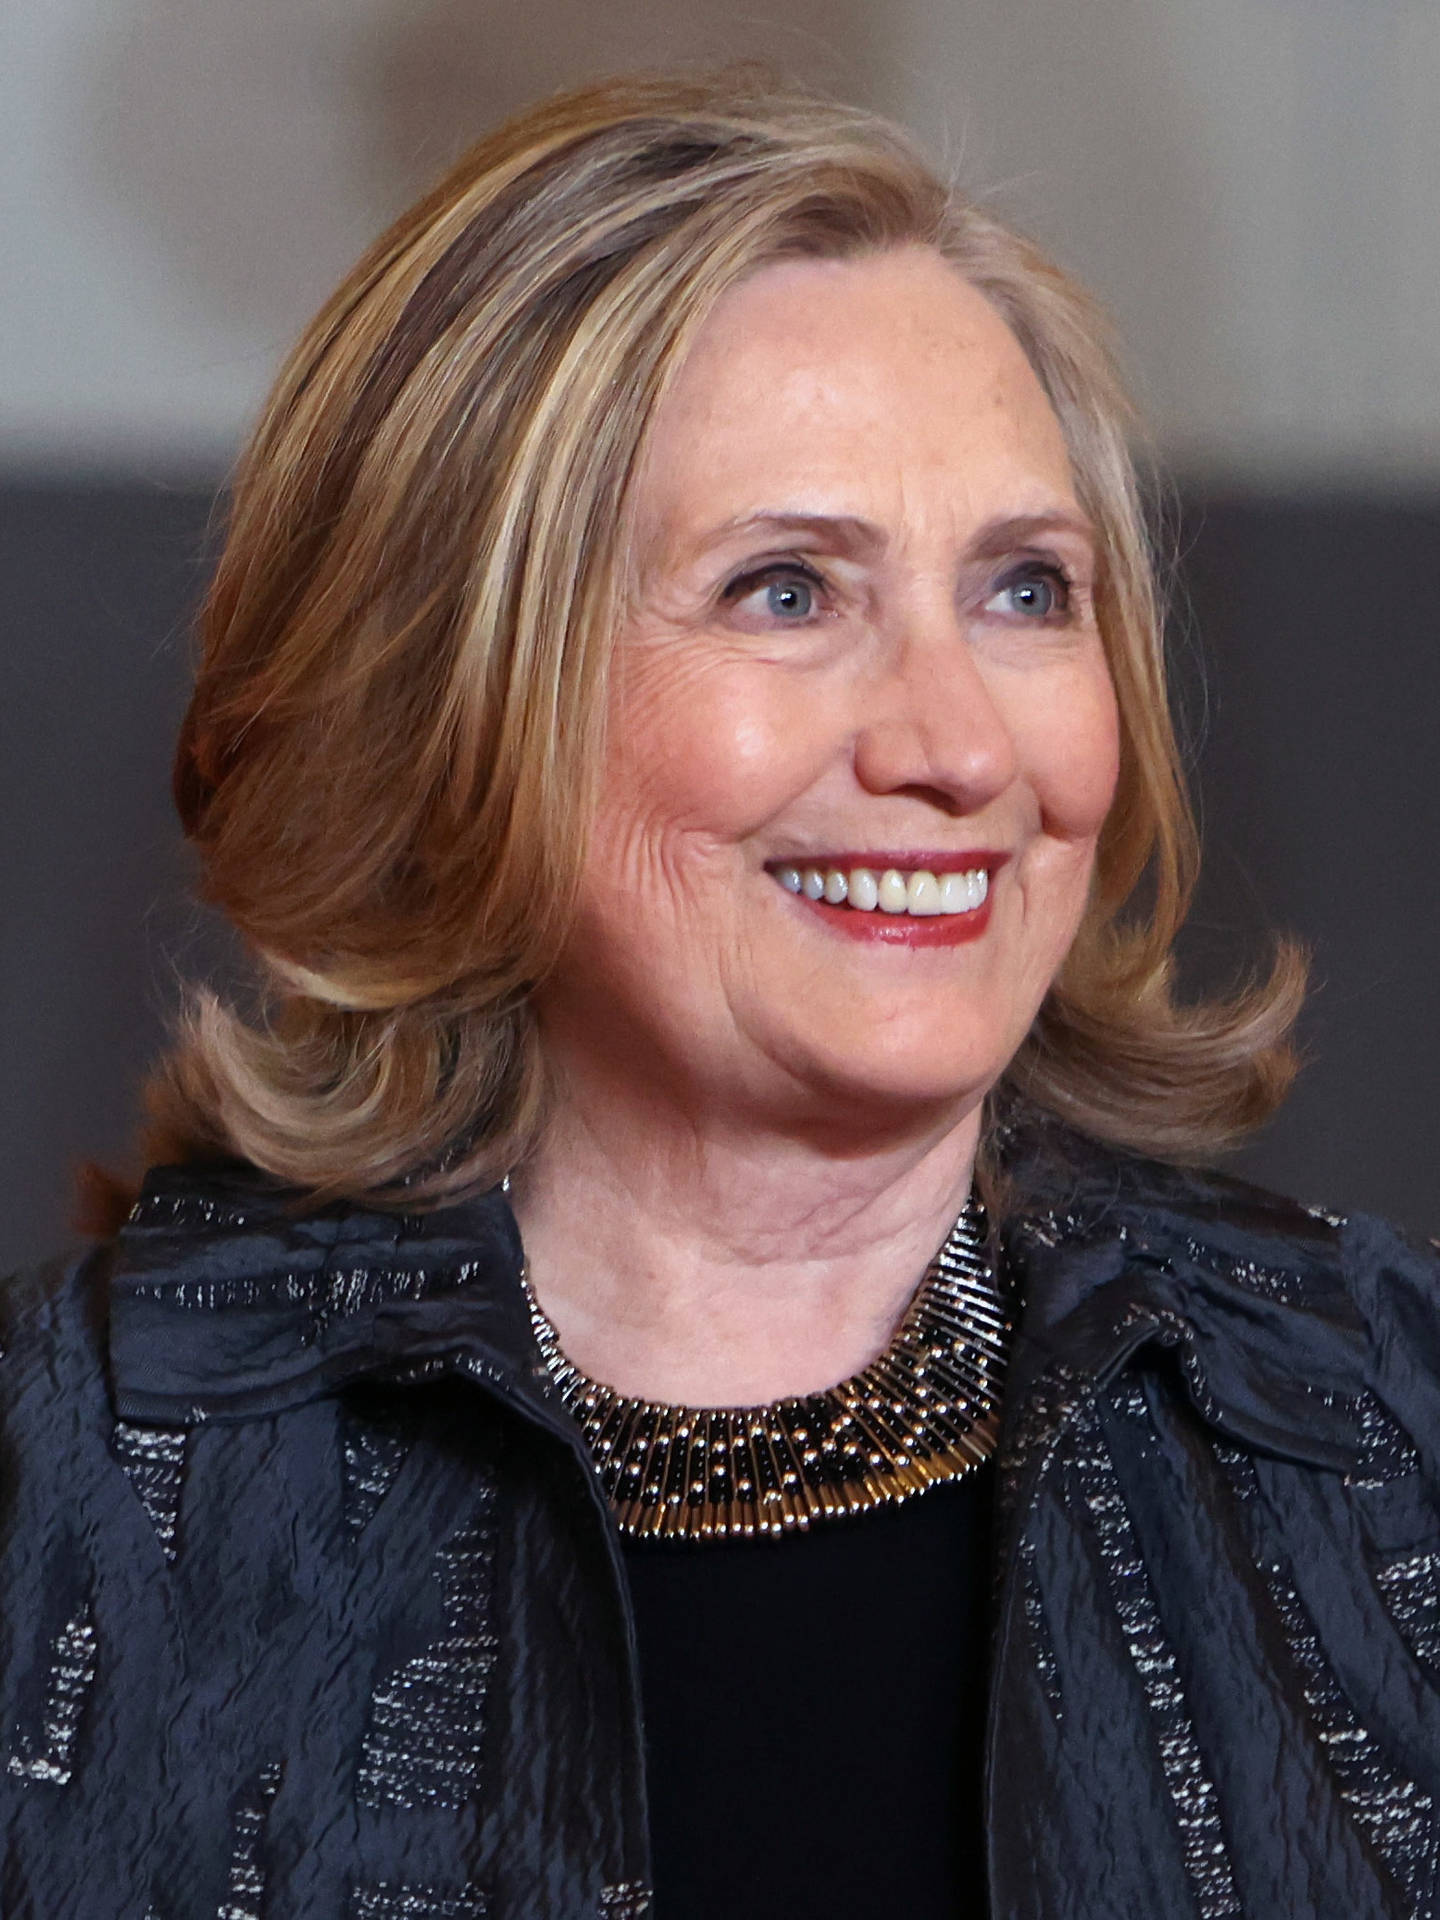 Hillary Clinton Side Profile Wallpaper